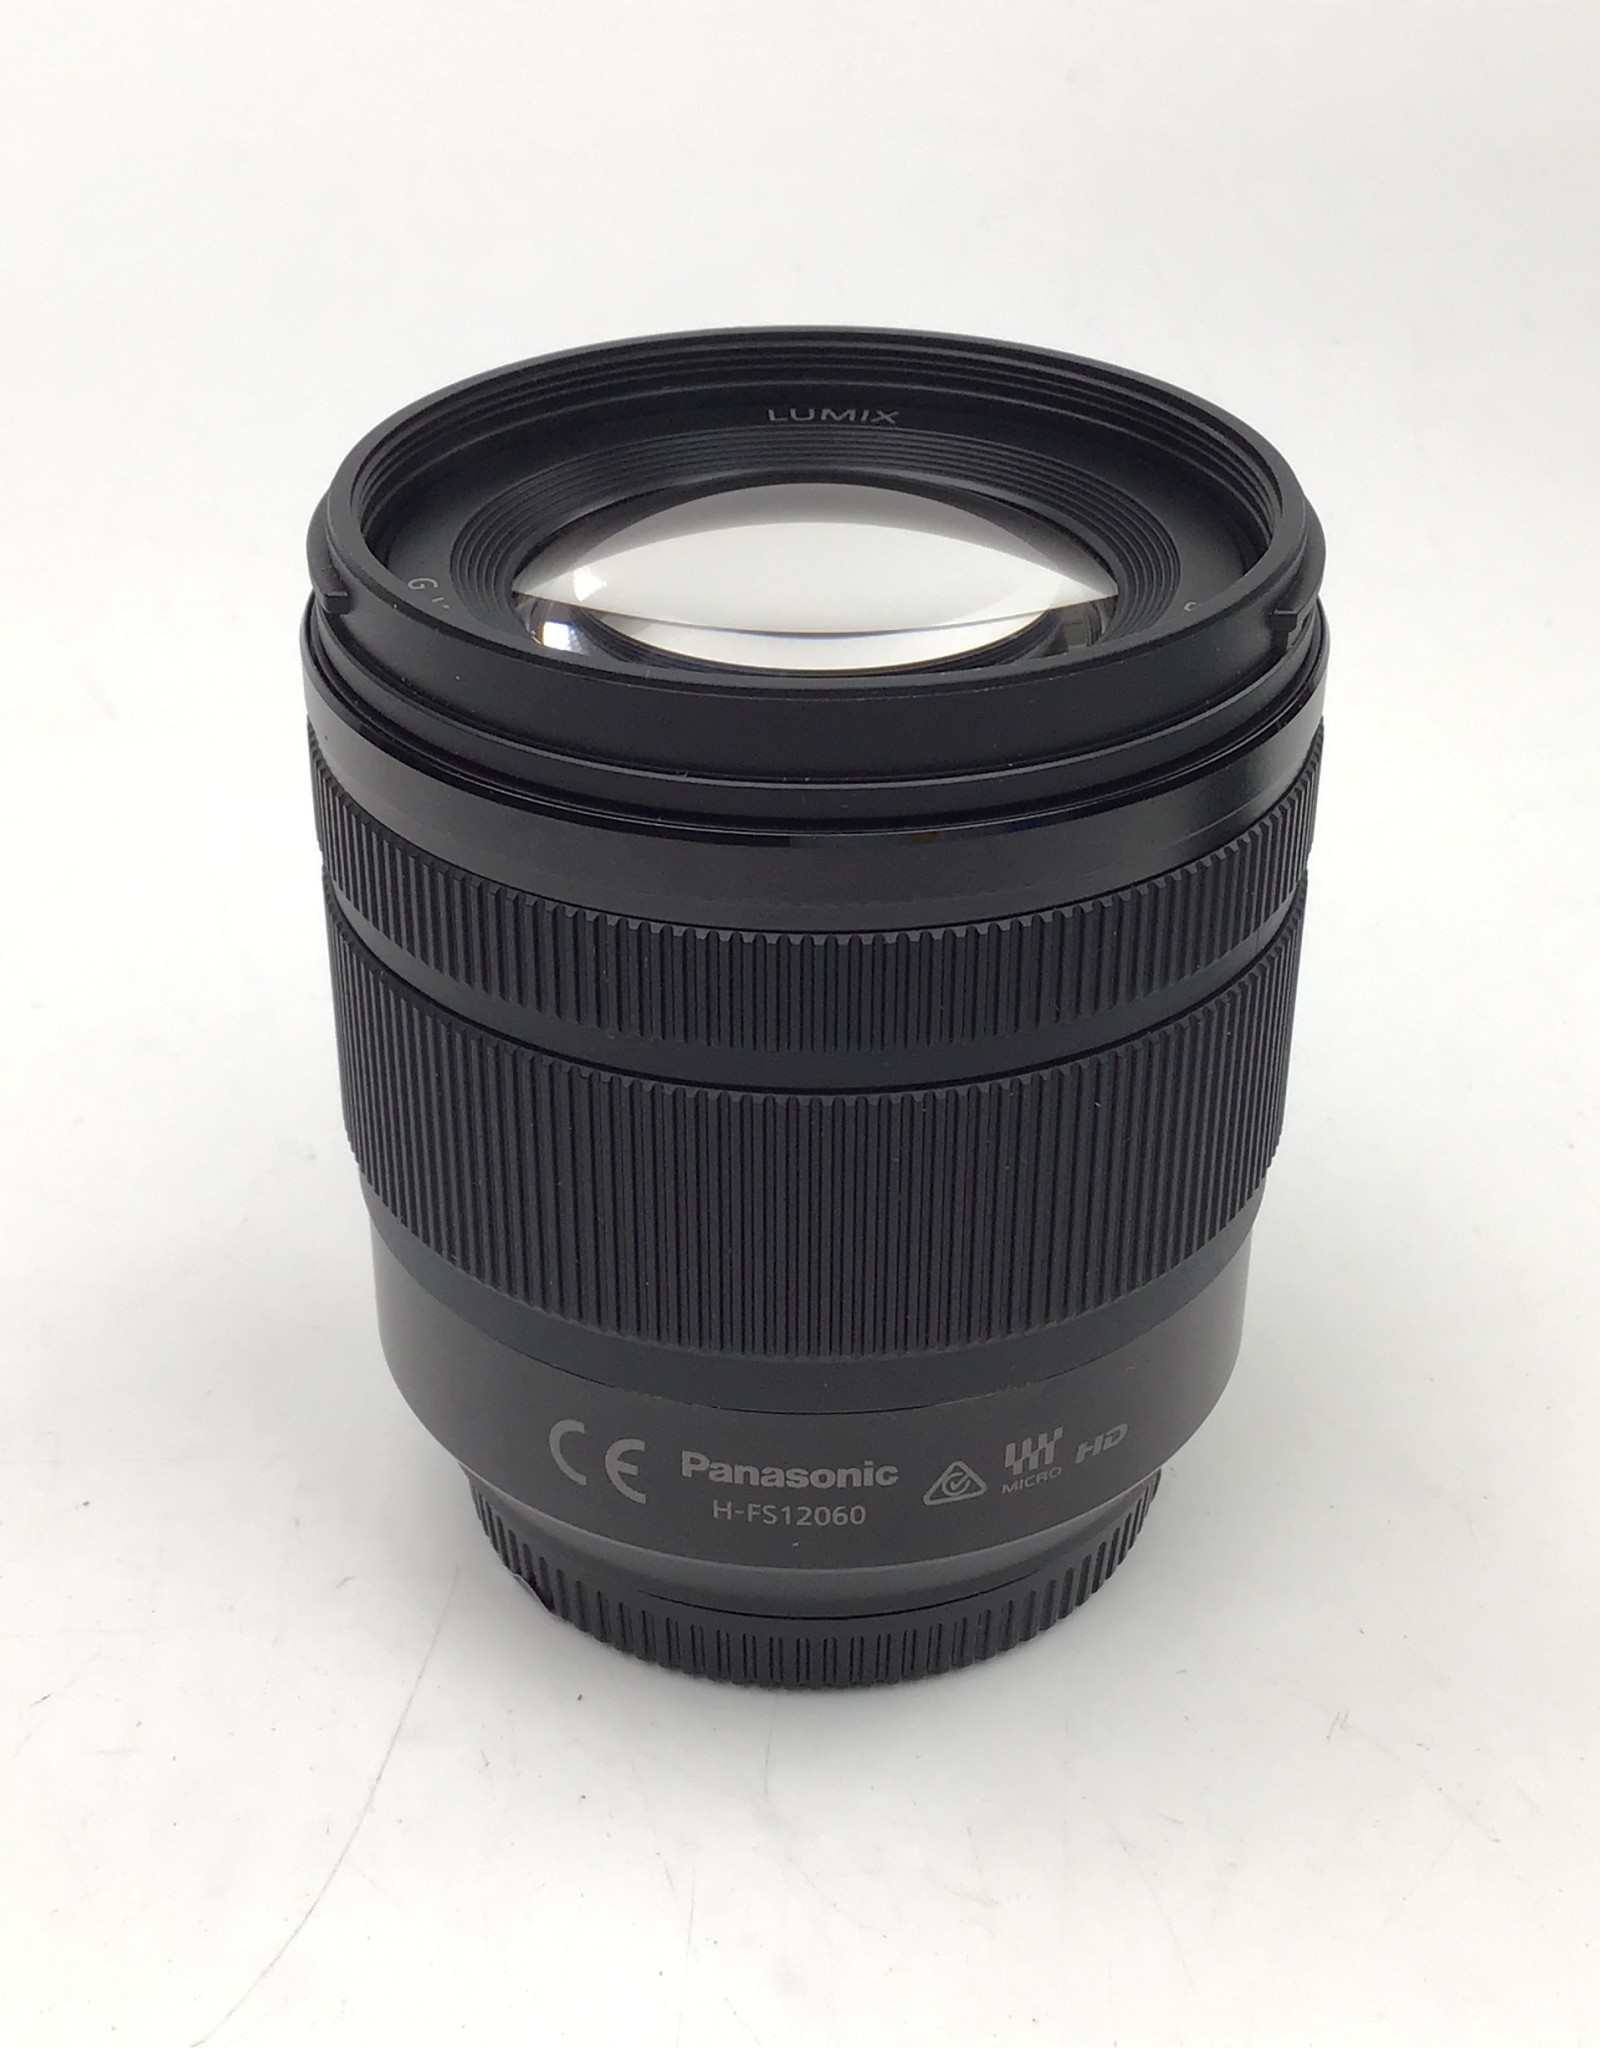 PANASONIC Lumix G Vario 12-60 ASPH 3.5-5.6 Lens Used Good